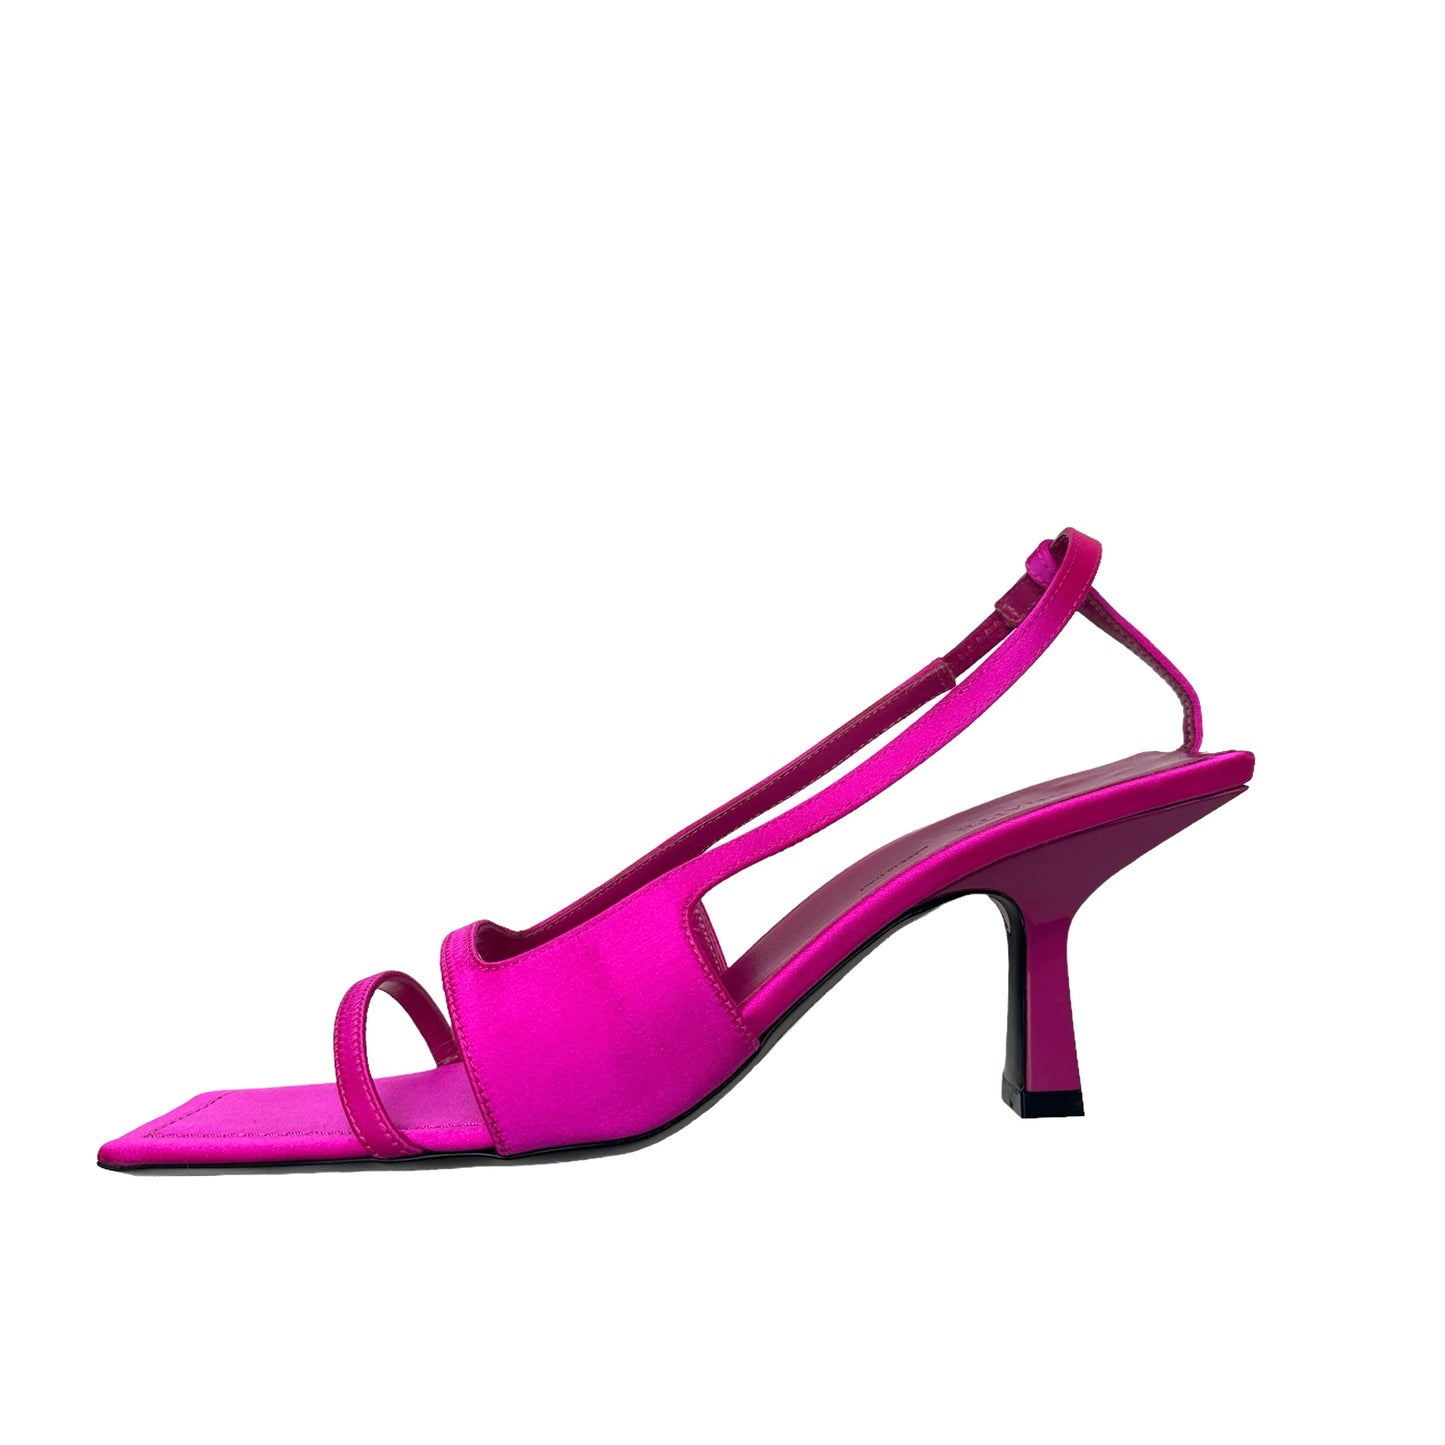 Rhoe Pink Satin Sandals - 7.5